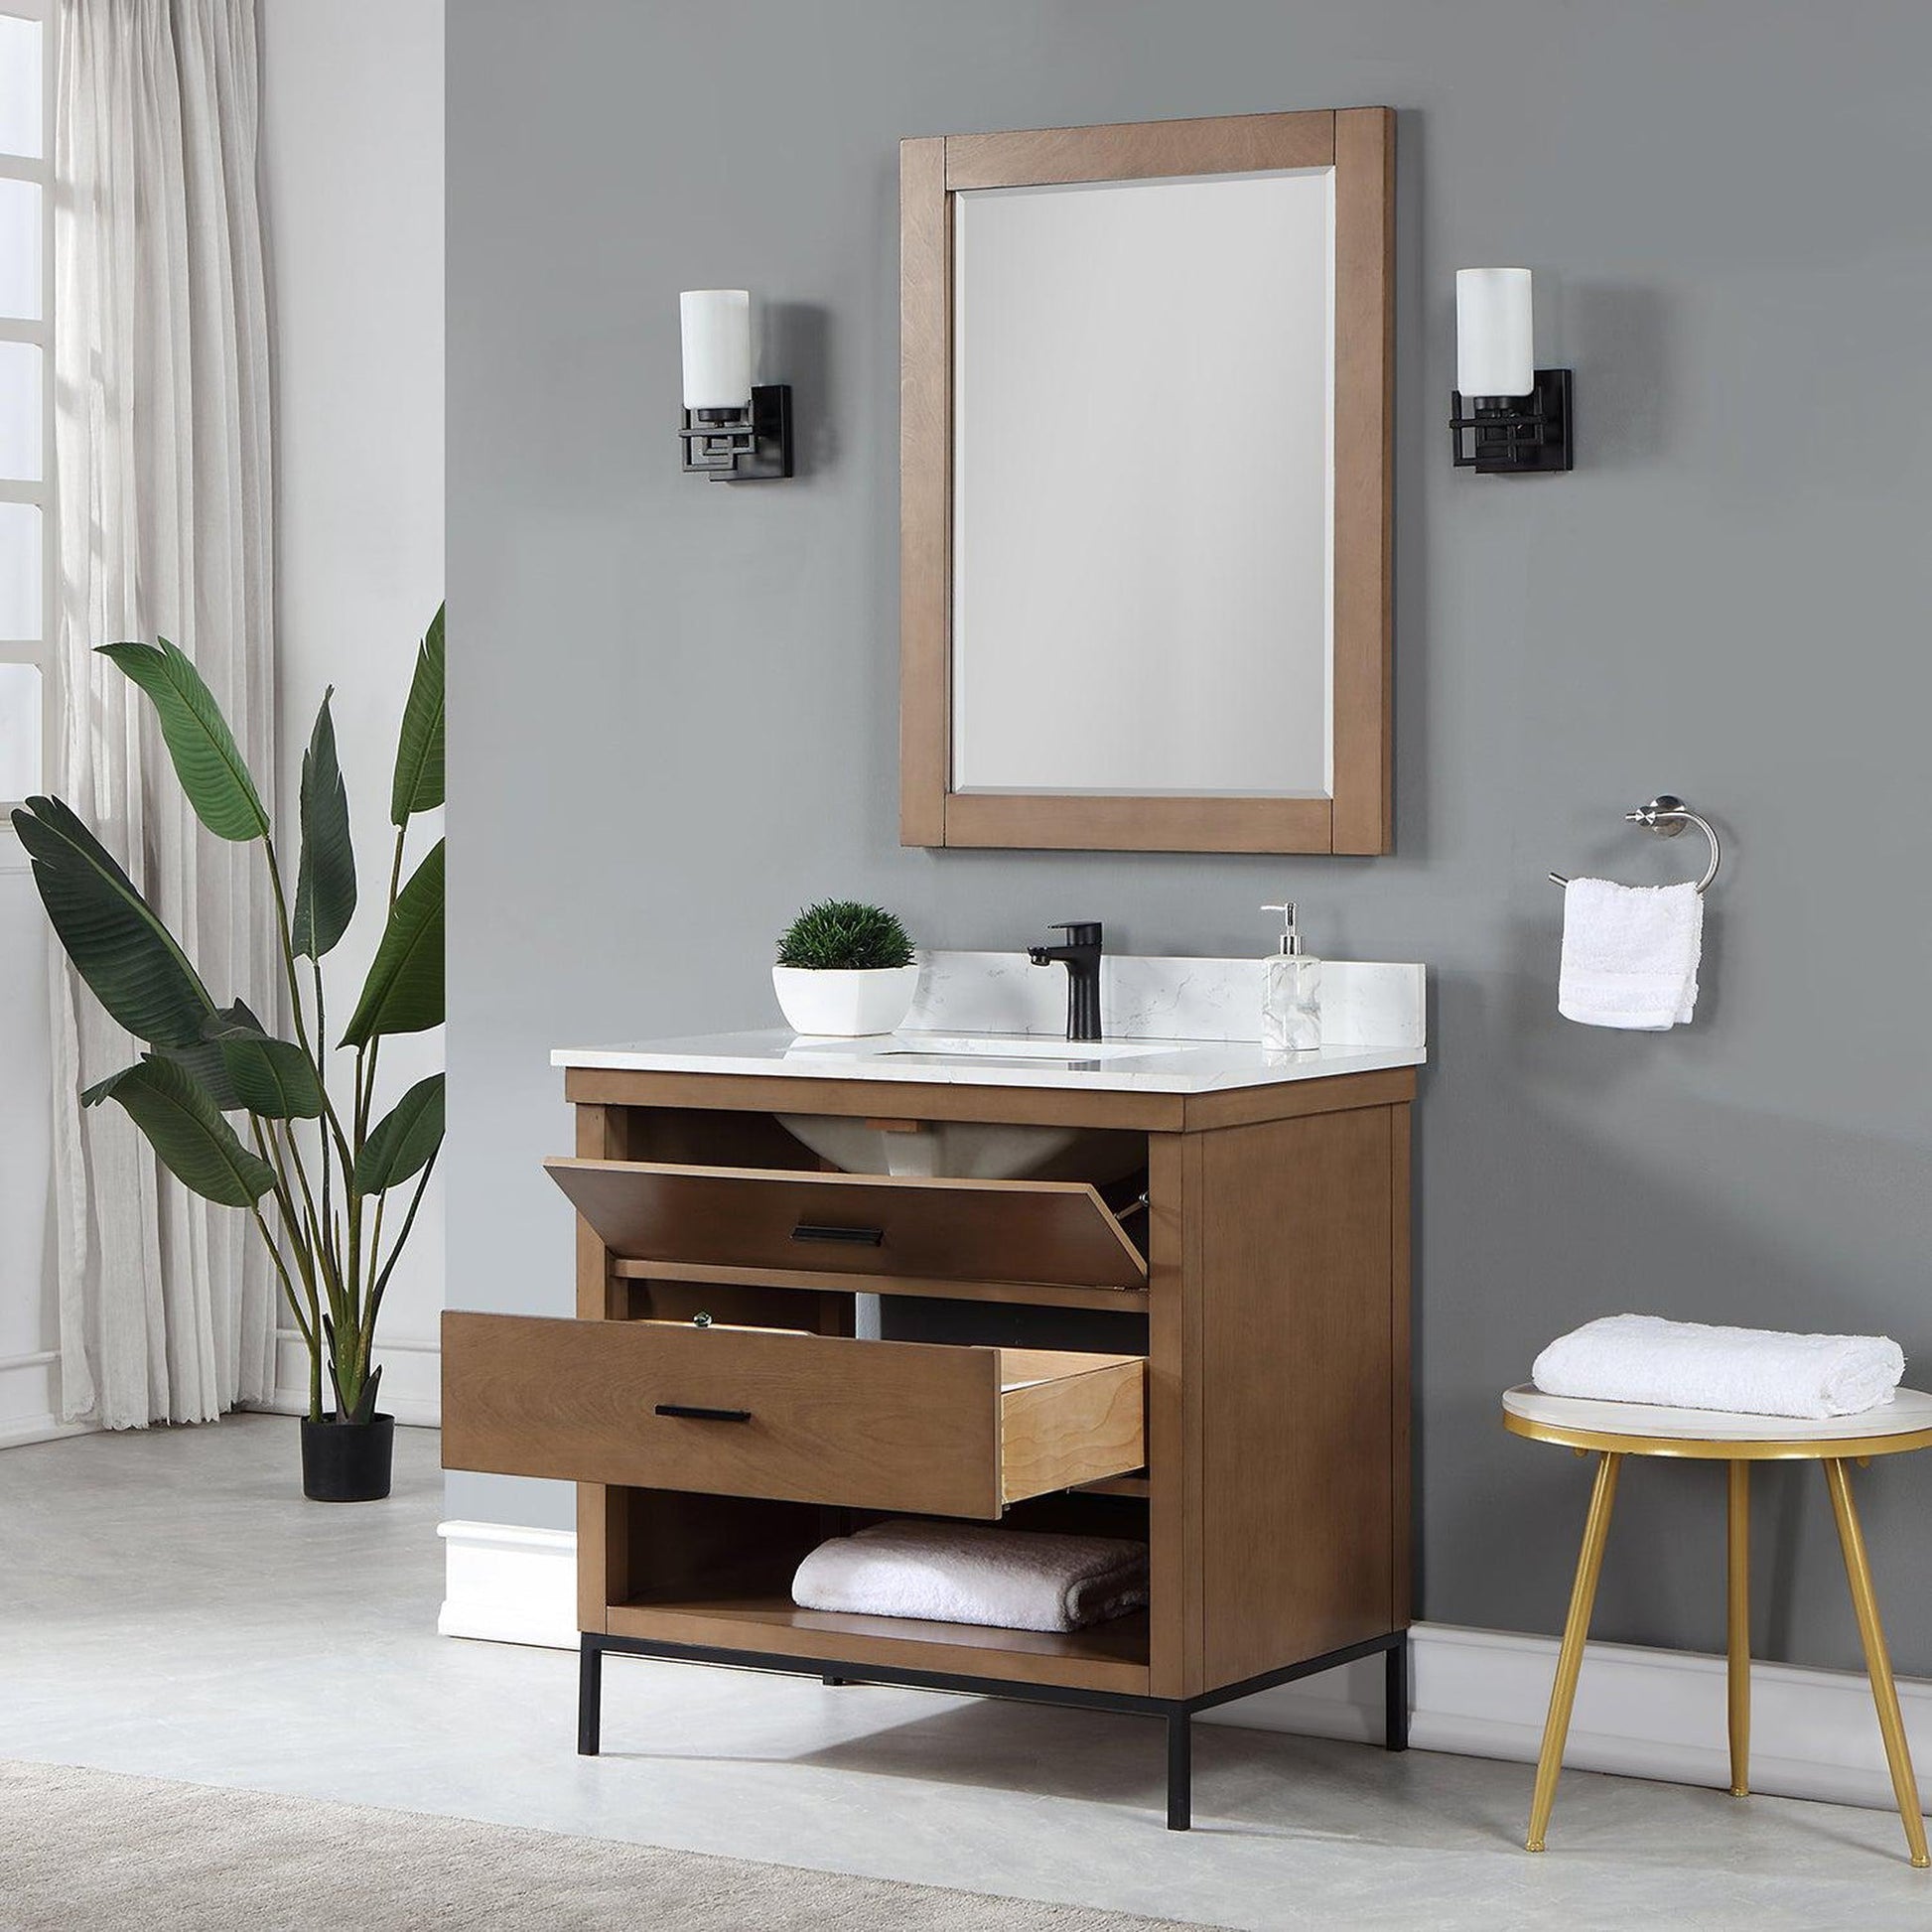 Altair Kesia 36" Brown Pine Freestanding Single Bathroom Vanity Set With Mirror, Stylish Aosta White Composite Stone Top, Rectangular Undermount Ceramic Sink, Overflow, and Backsplash